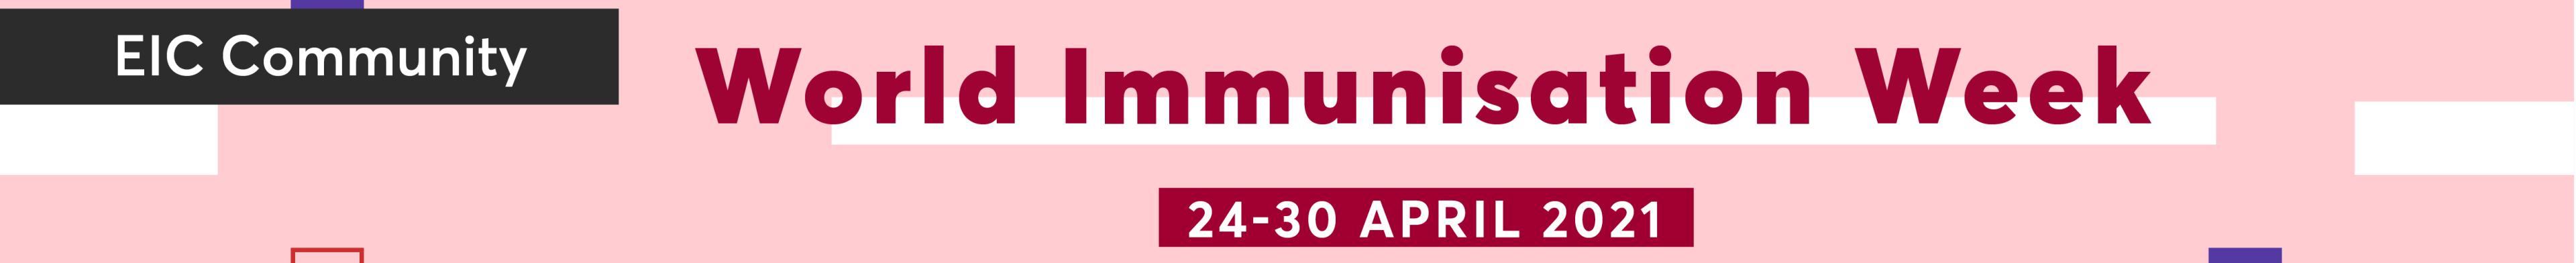 eic_world_immunization_week_community_banner.jpg